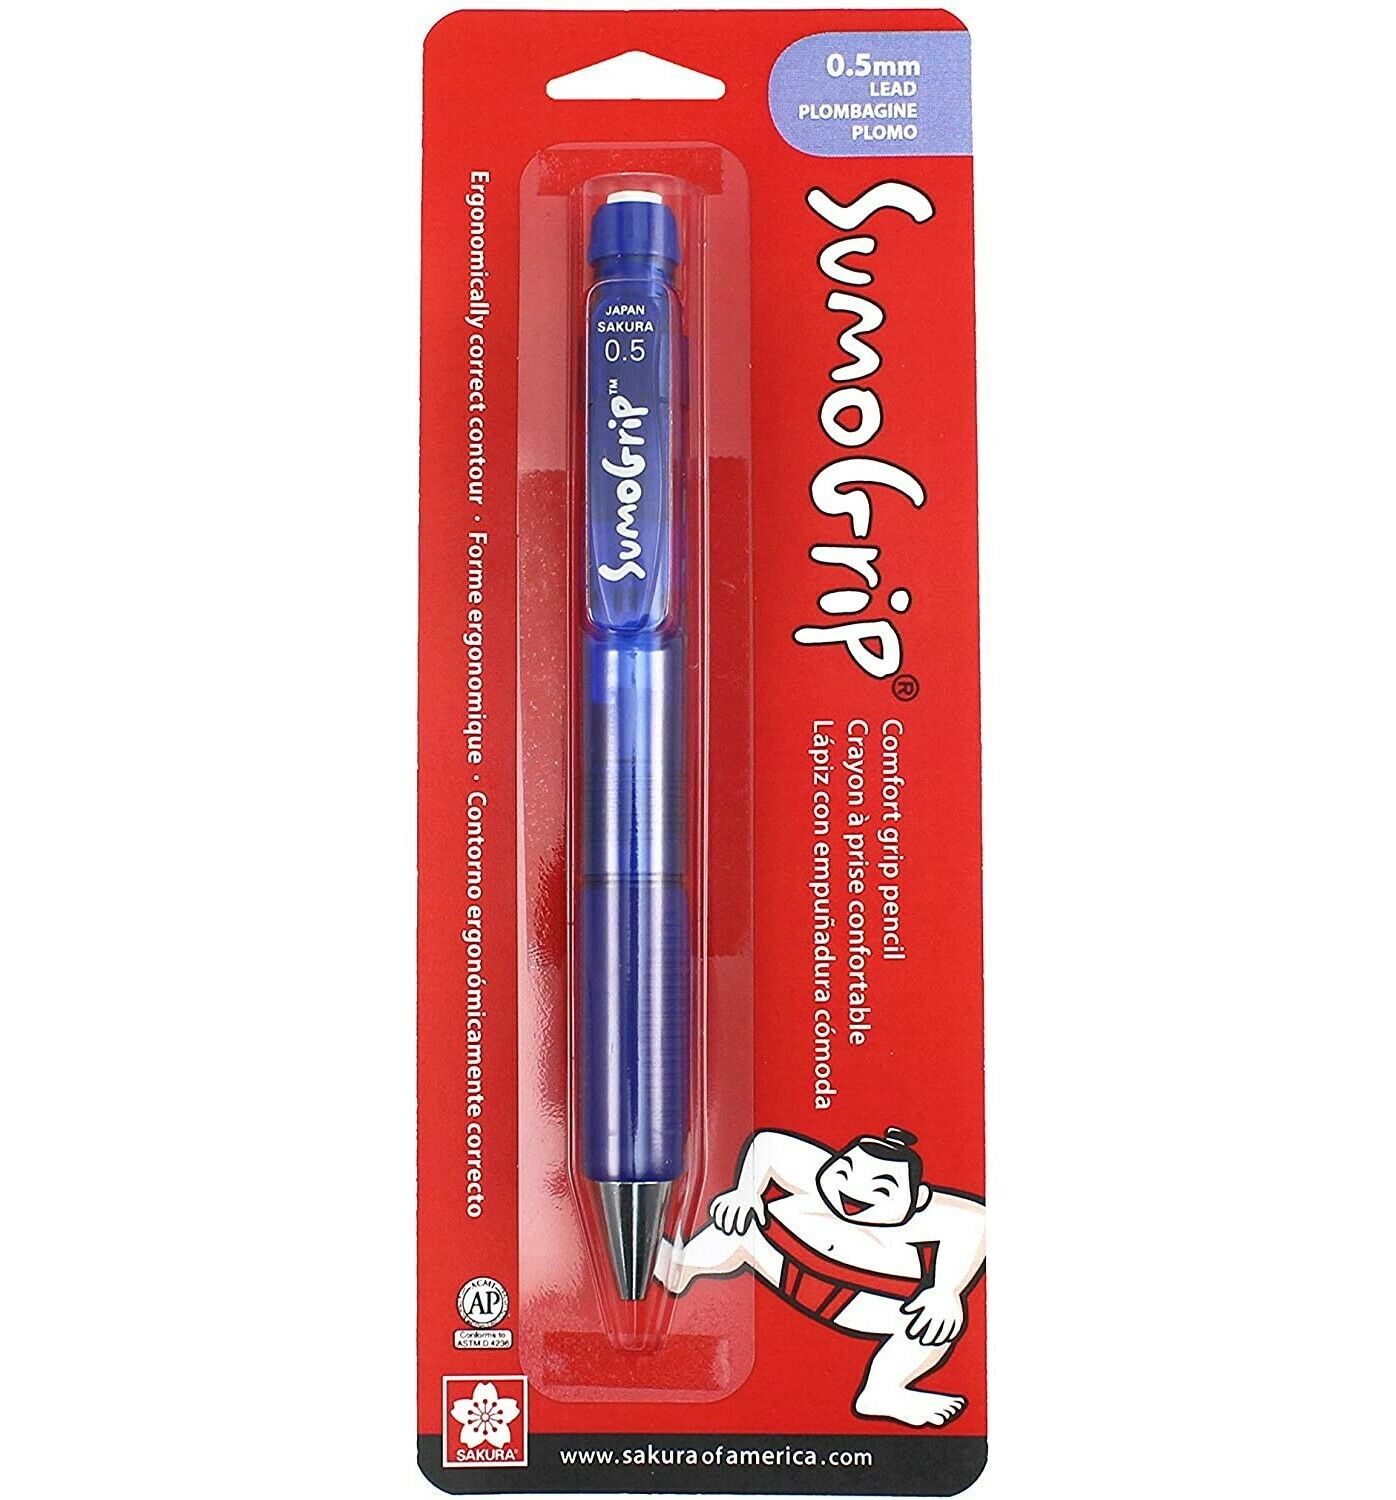 Sakura Sumo Grip Comfort Grip Mechanical Pencil, 0.5mm, Blue Barrel, Pack Of 1